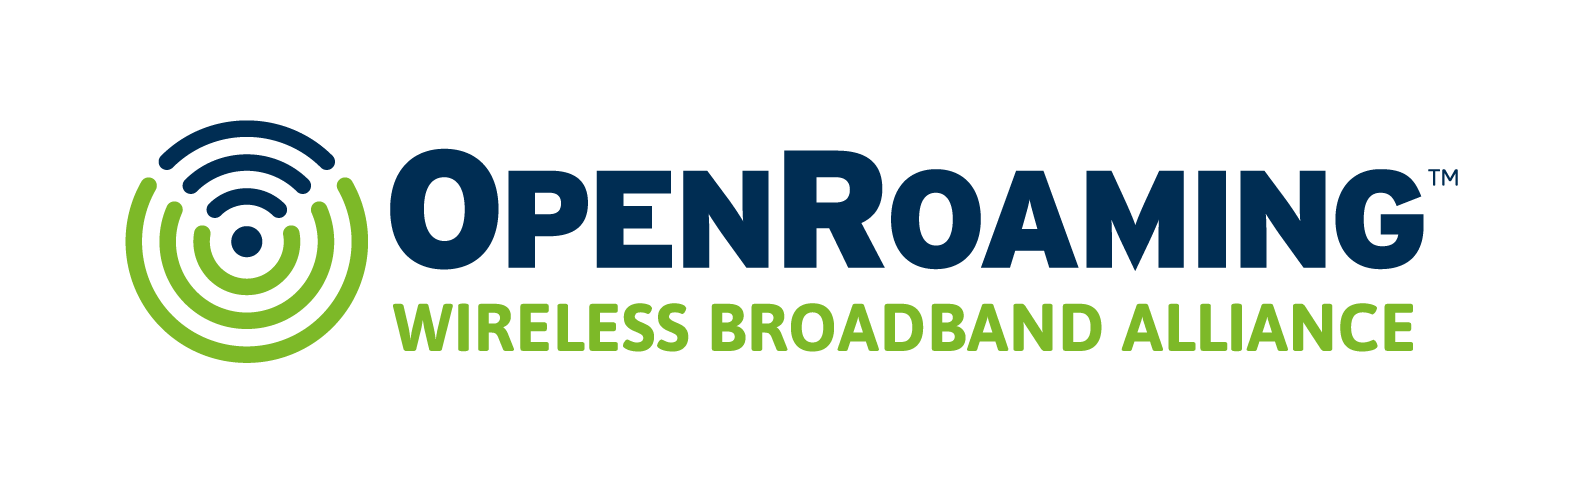 OpenRoaming Wireless Broadband Alliance logo